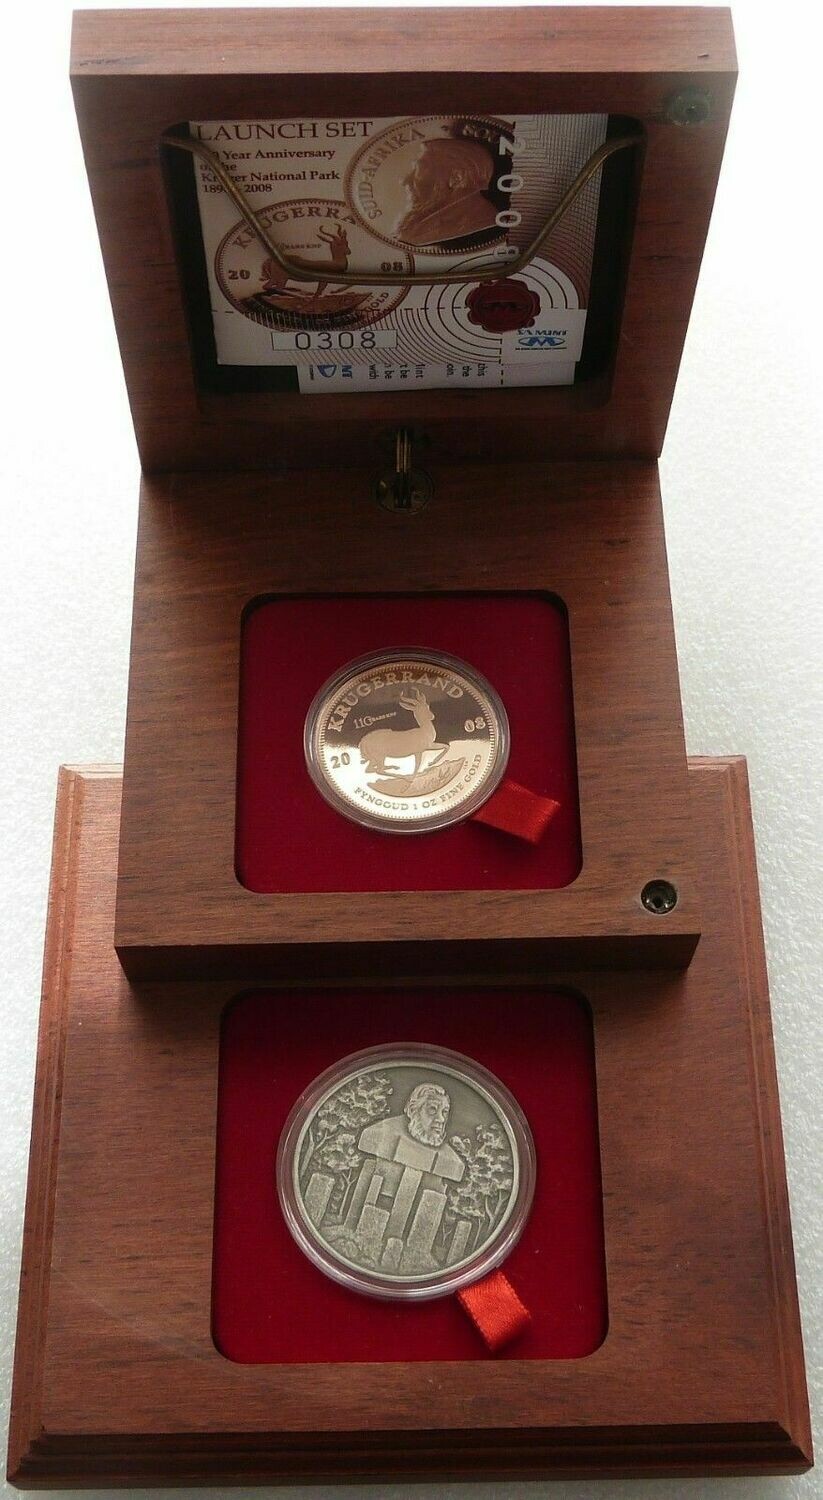 2008 South Africa Kruger National Park Launch Mint Mark Krugerrand Gold Proof 1oz Coin Box Coa